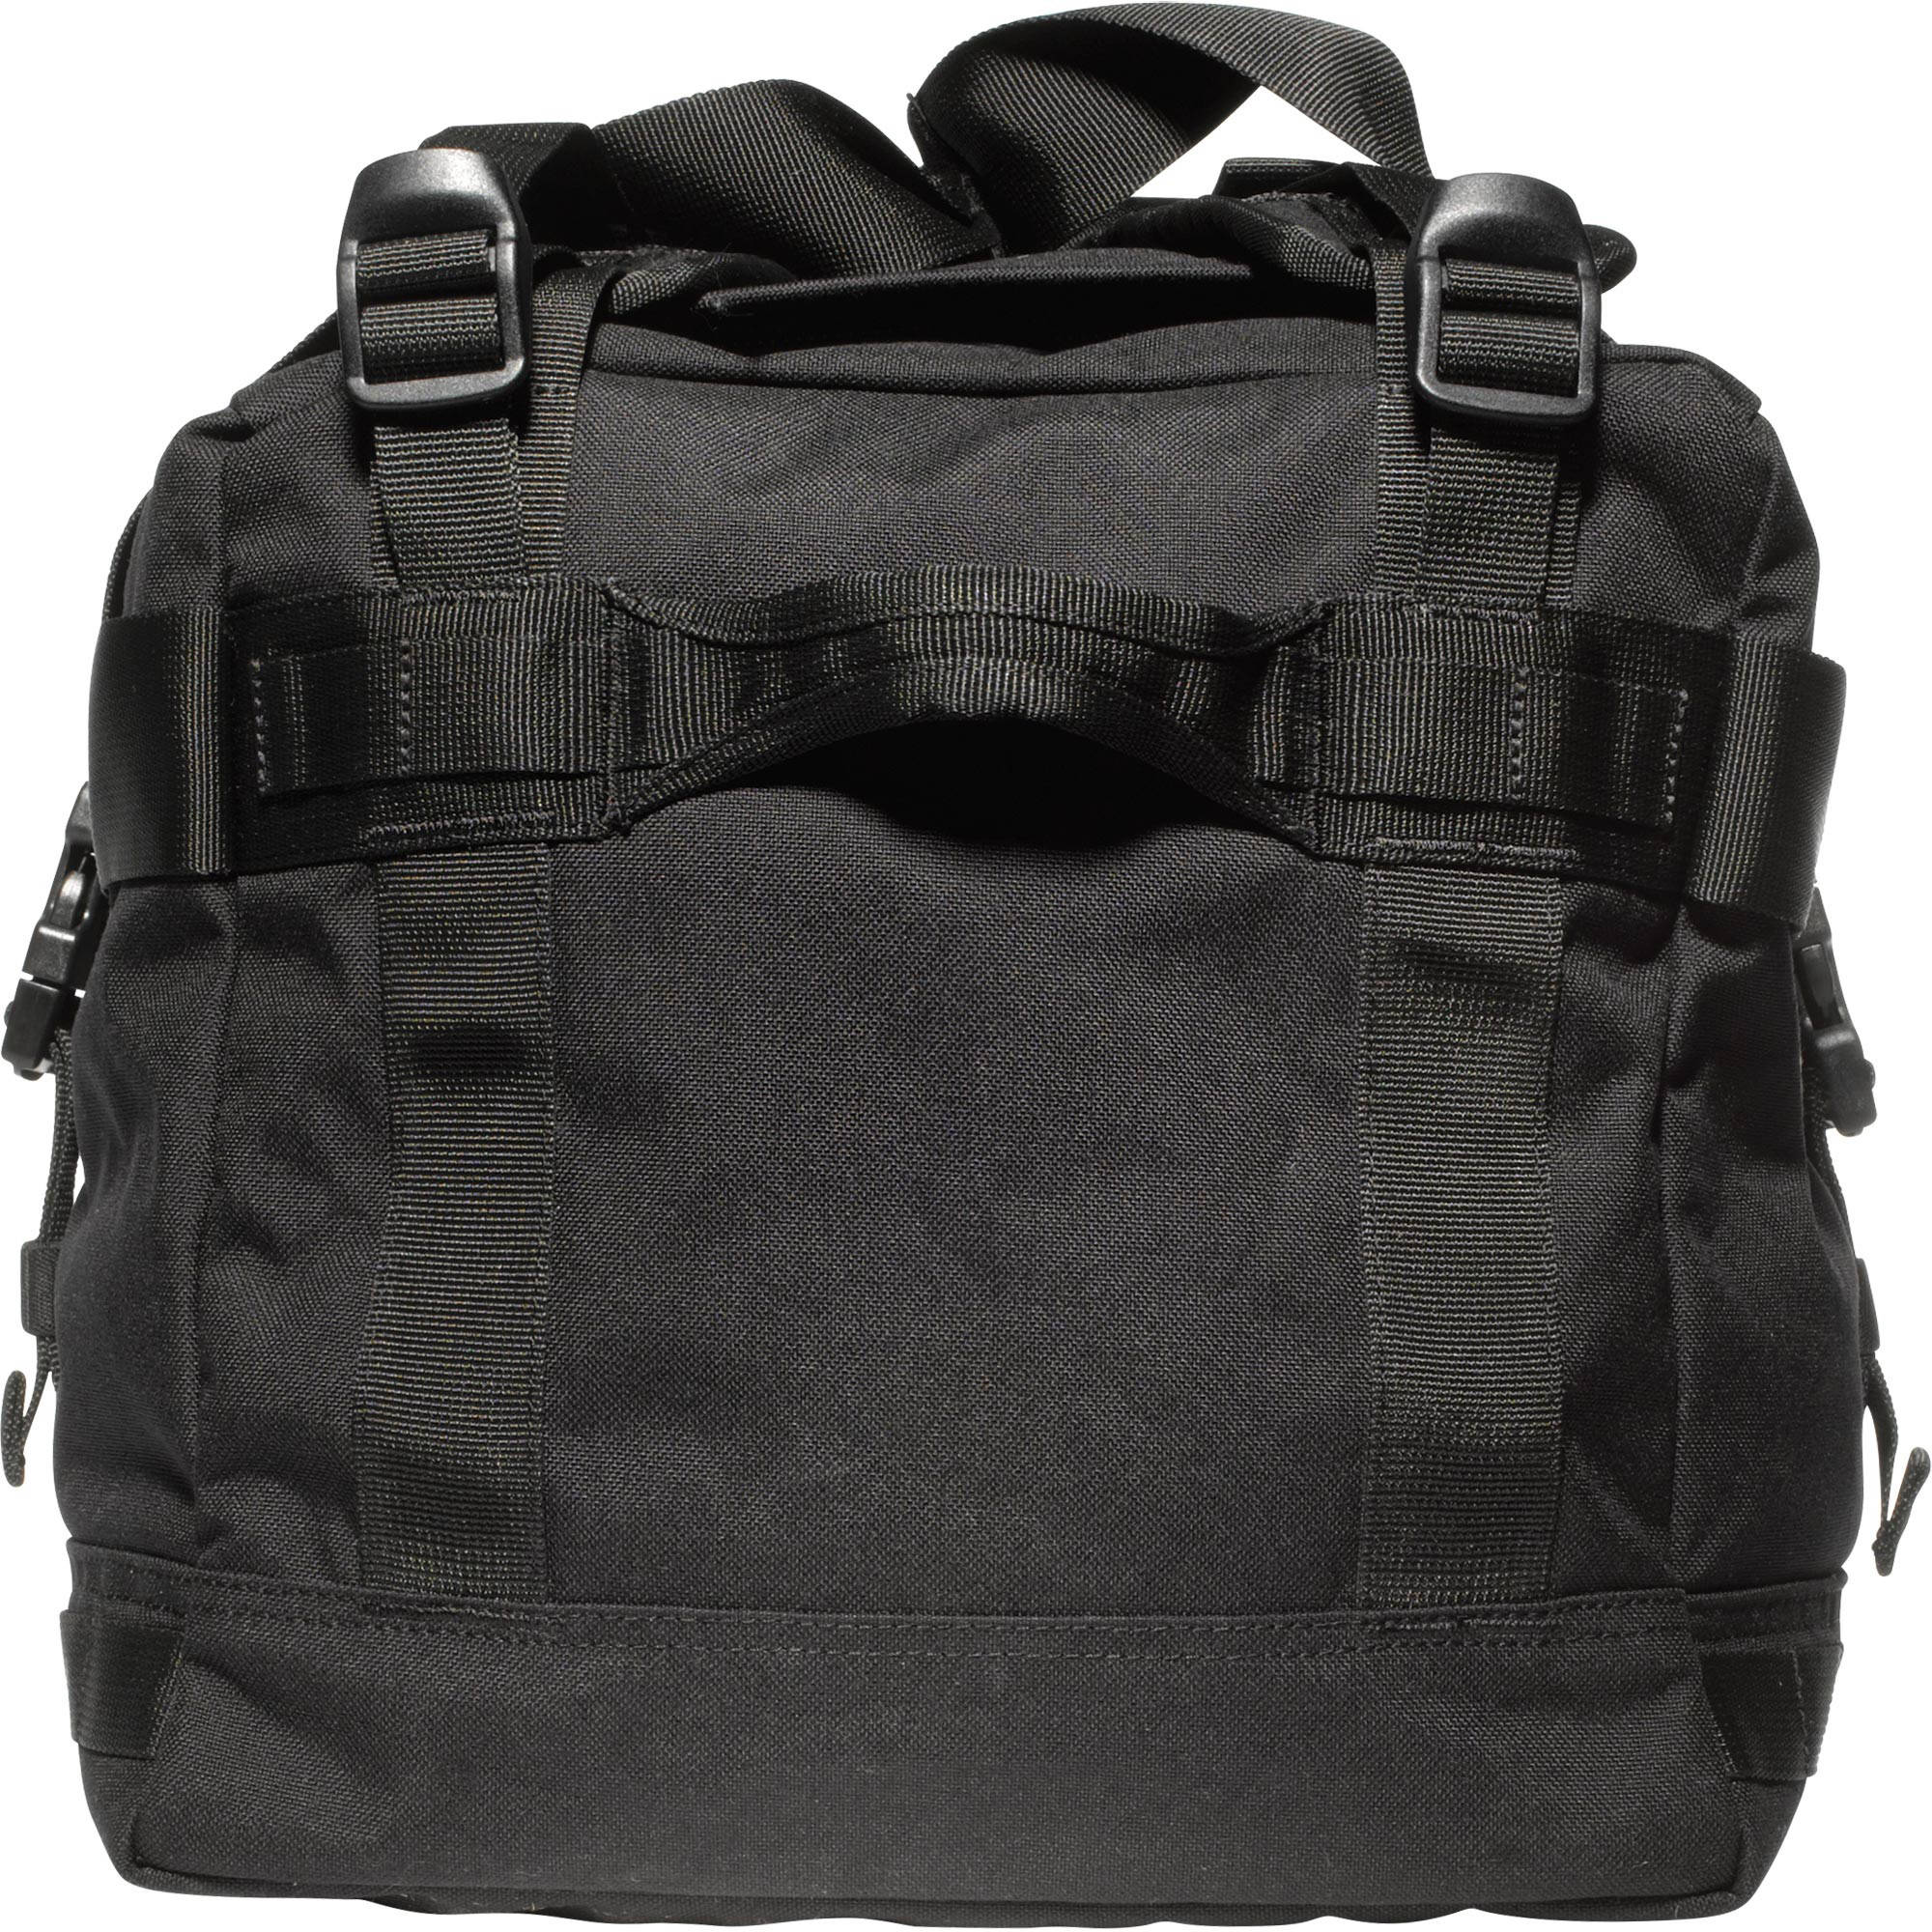 5.11 Tactical Rush LBD Lima Bag Rush LBD Lima, Black, One Size - image 2 of 2